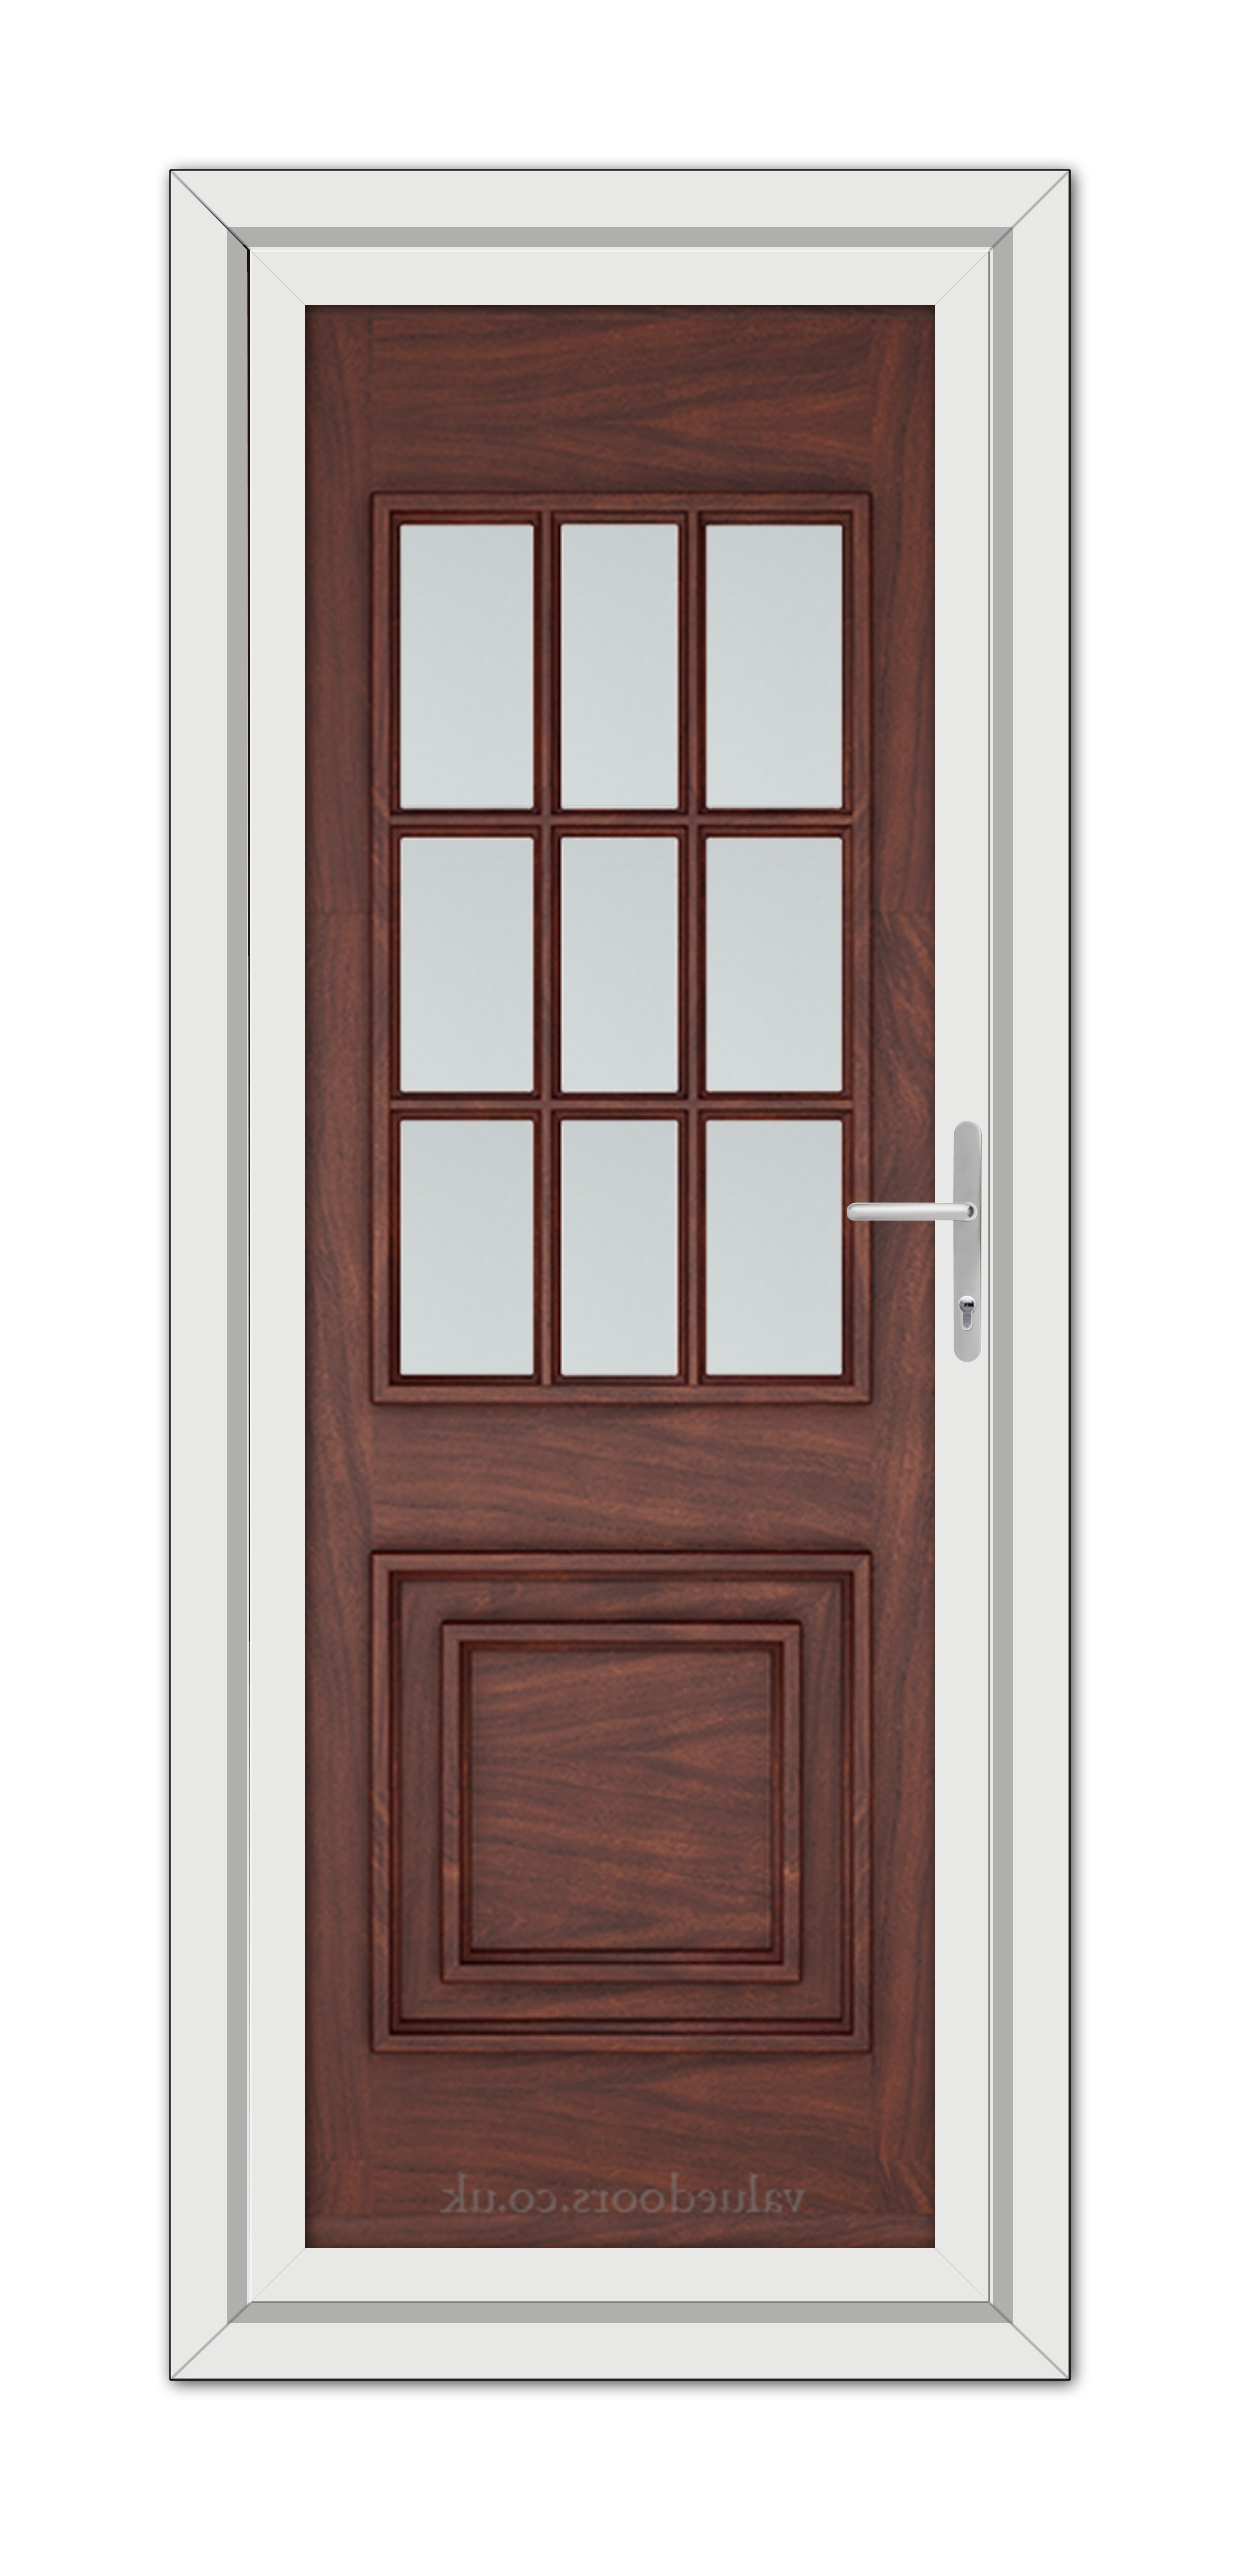 A close-up of a Rosewood Cambridge One uPVC Door.